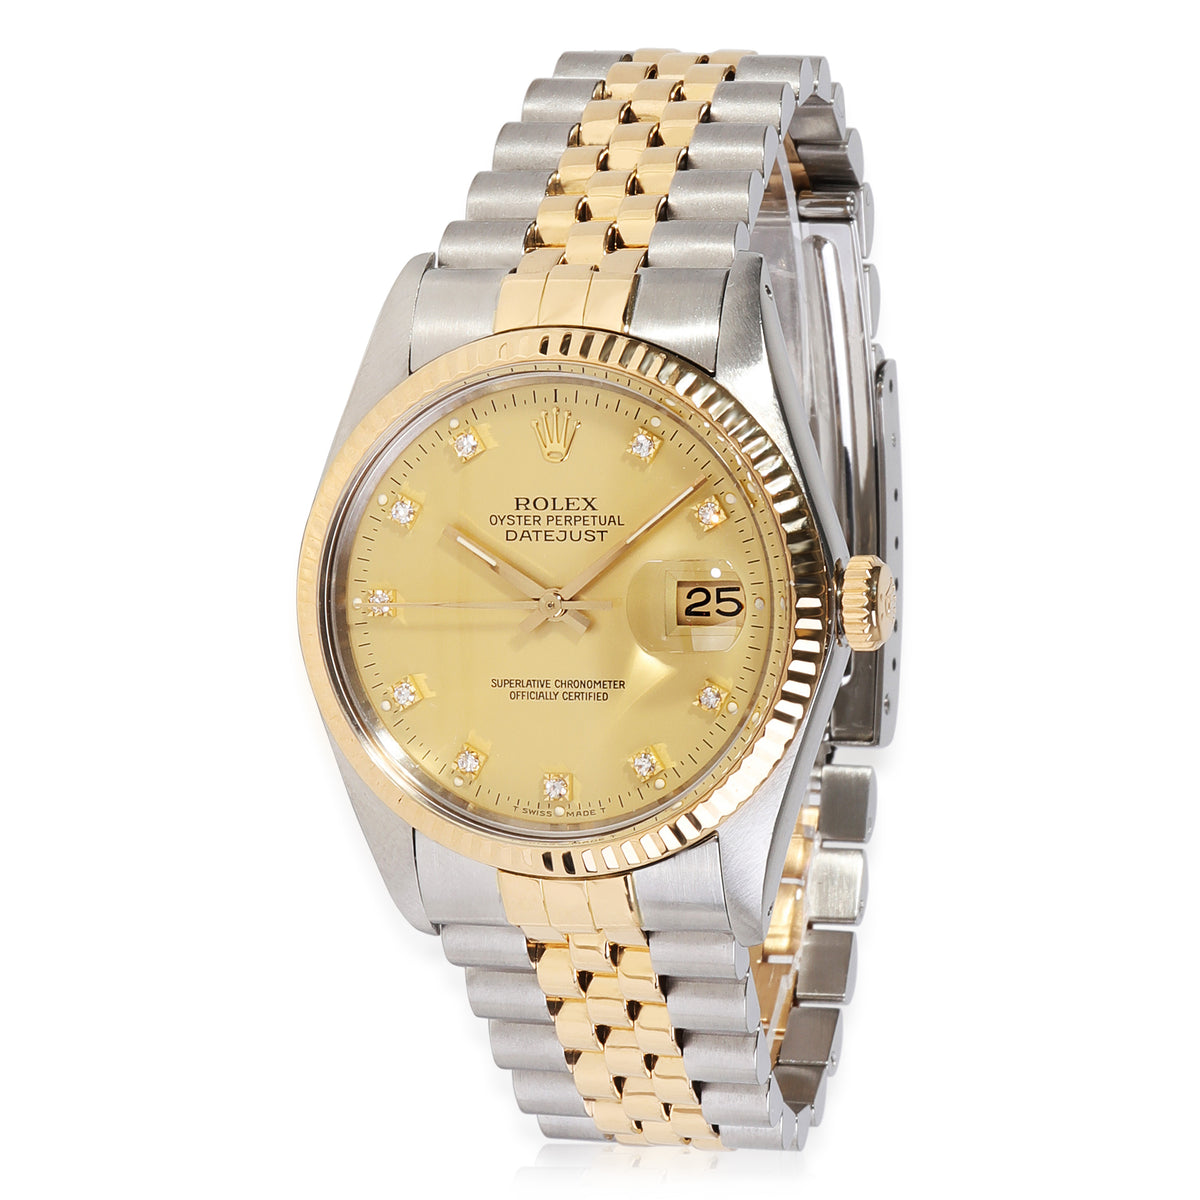 Rolex Datejust 16013 Men's Watch in 18kt Stainless Steel/Yellow Gold